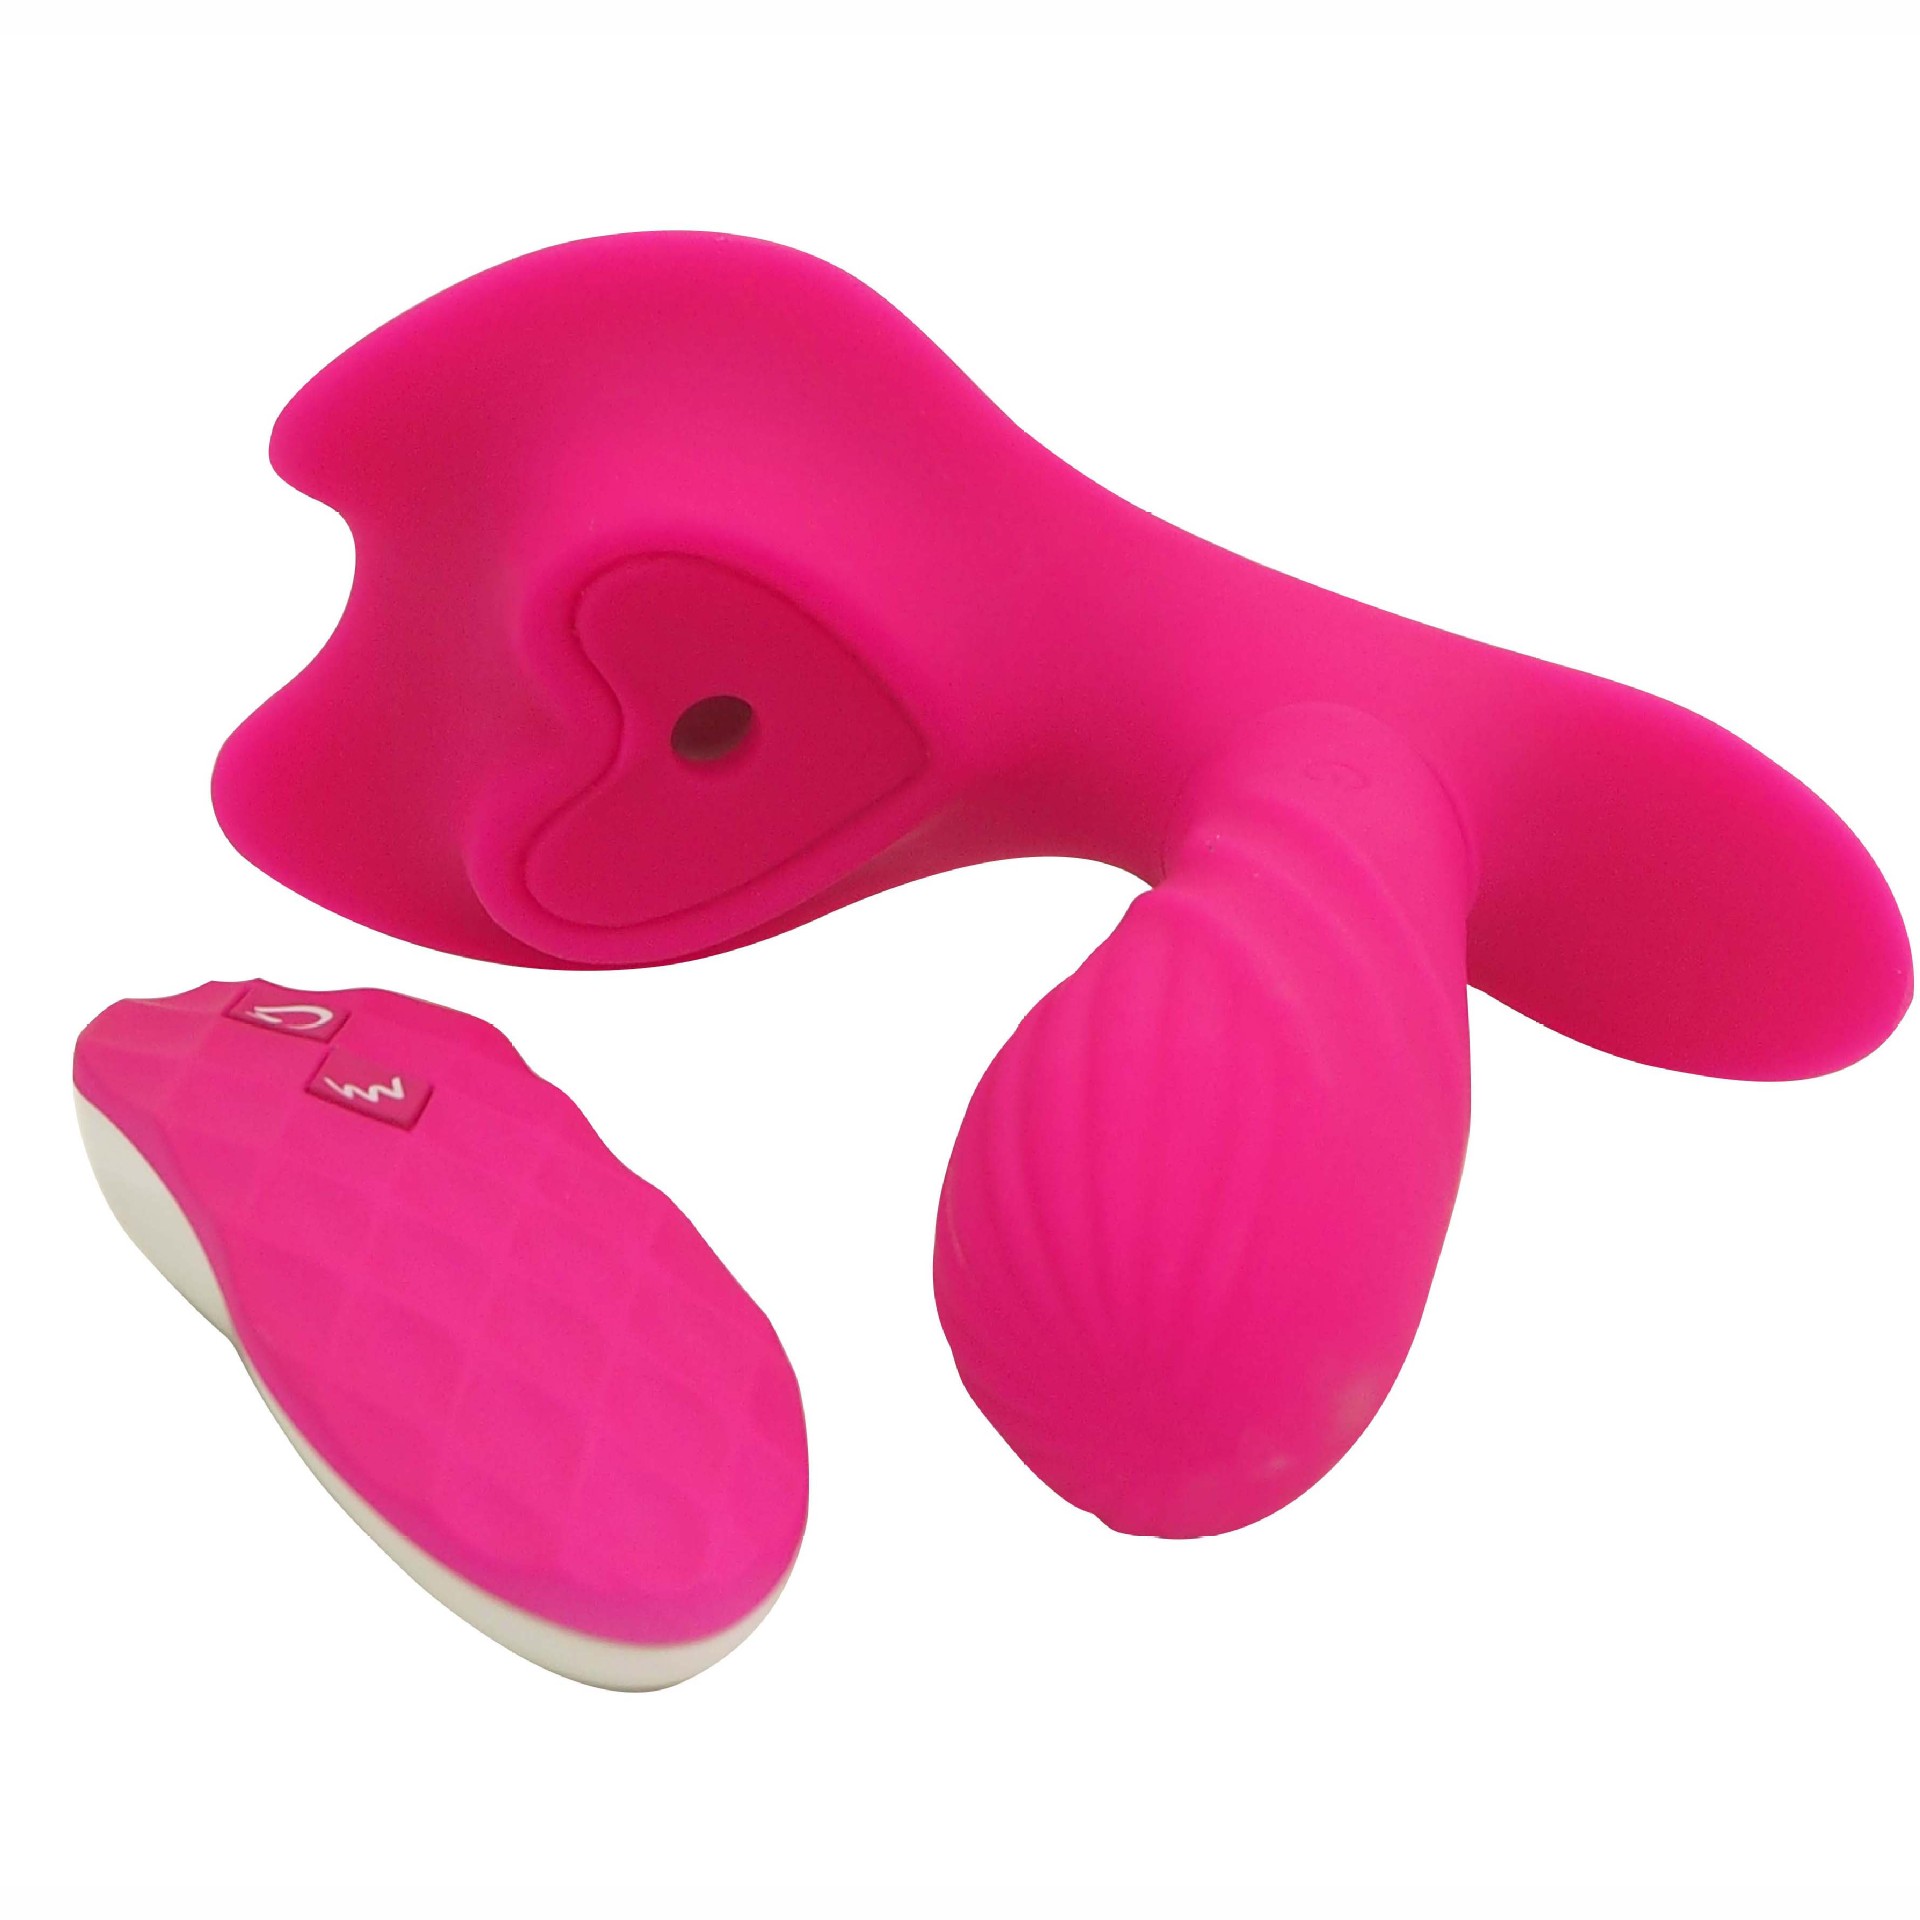 Honey O Pro Dual Vibrator Female Sex Toy with Remote-Lovevib